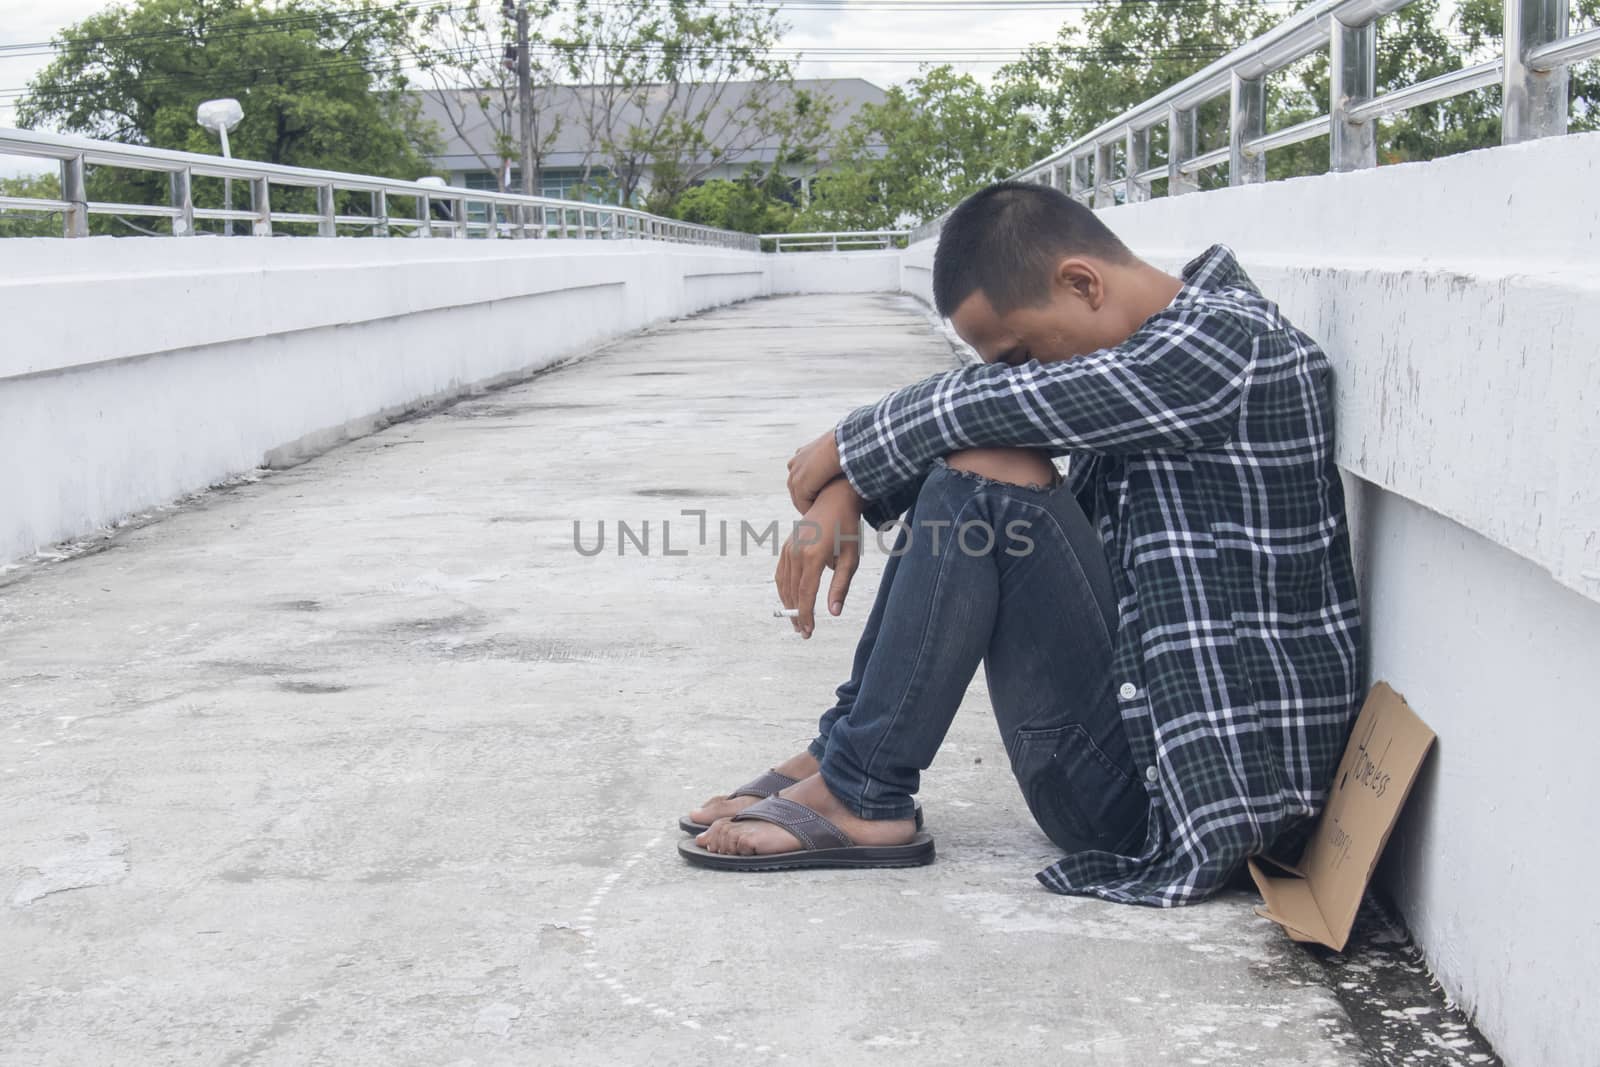 Unhappy homeless man sitting on overpass